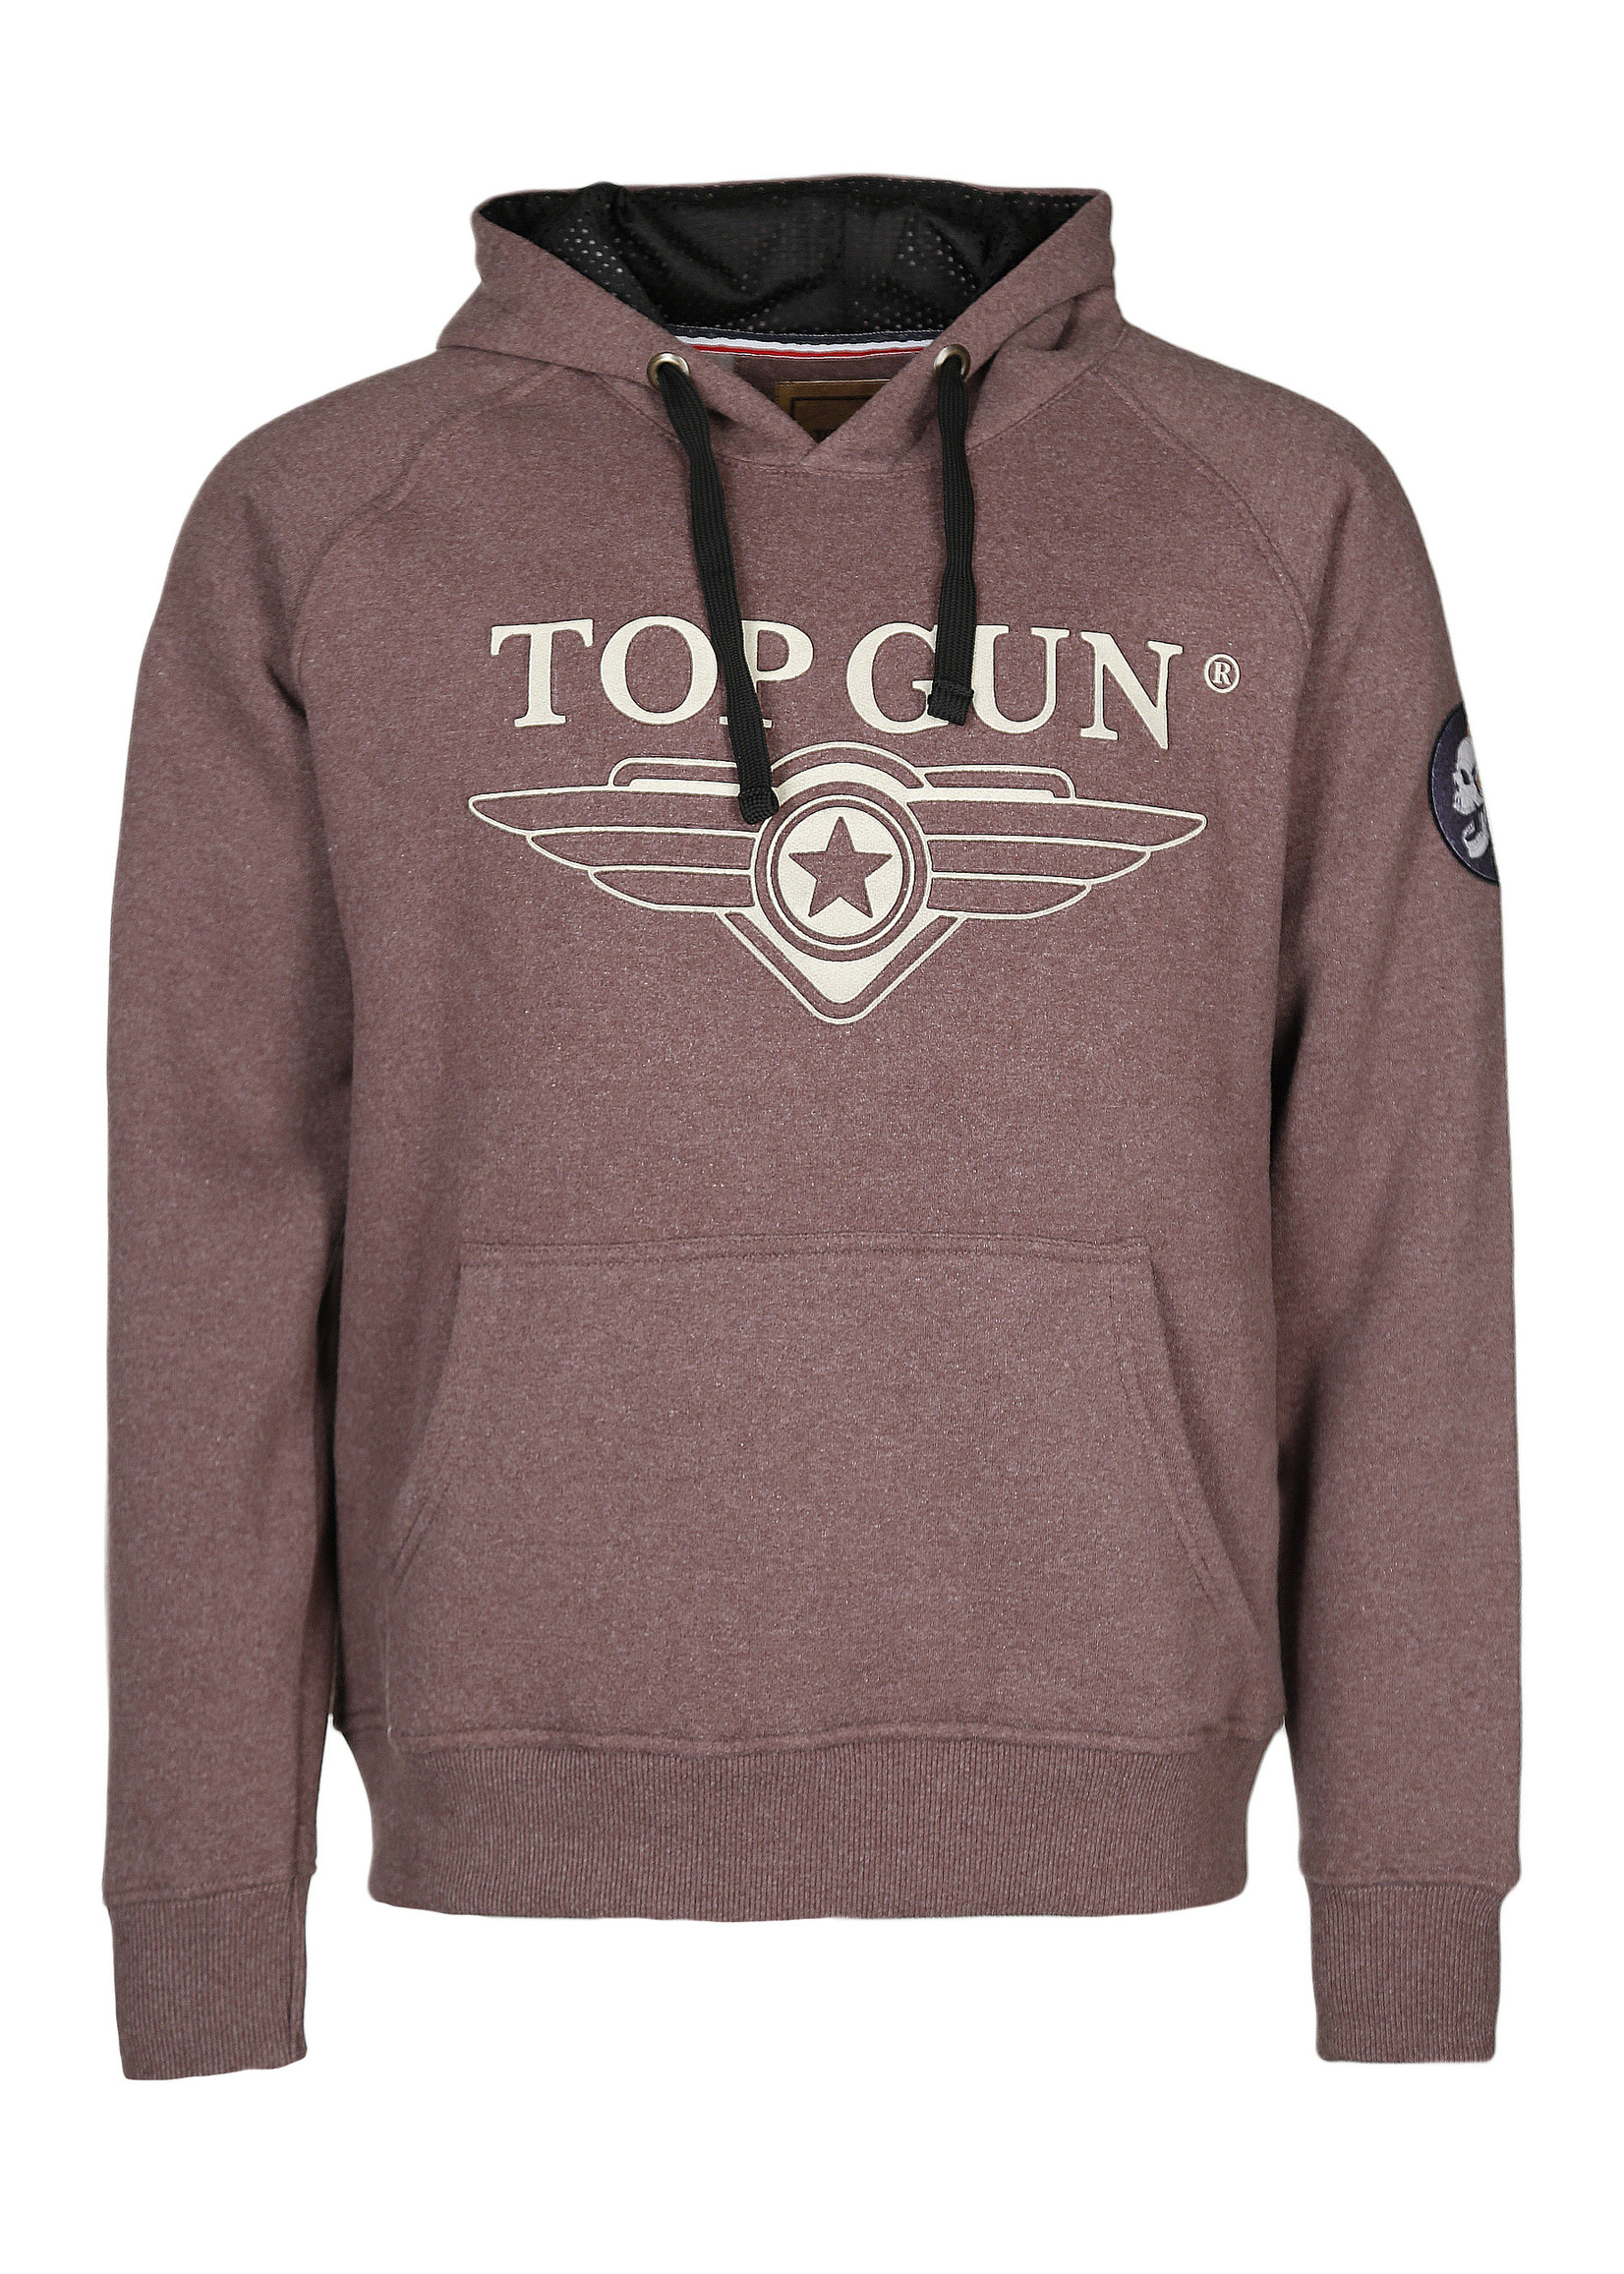 Top Gun Top Gun ® Hoodie sweatshirt "Logo TST" with patches on the sleeve